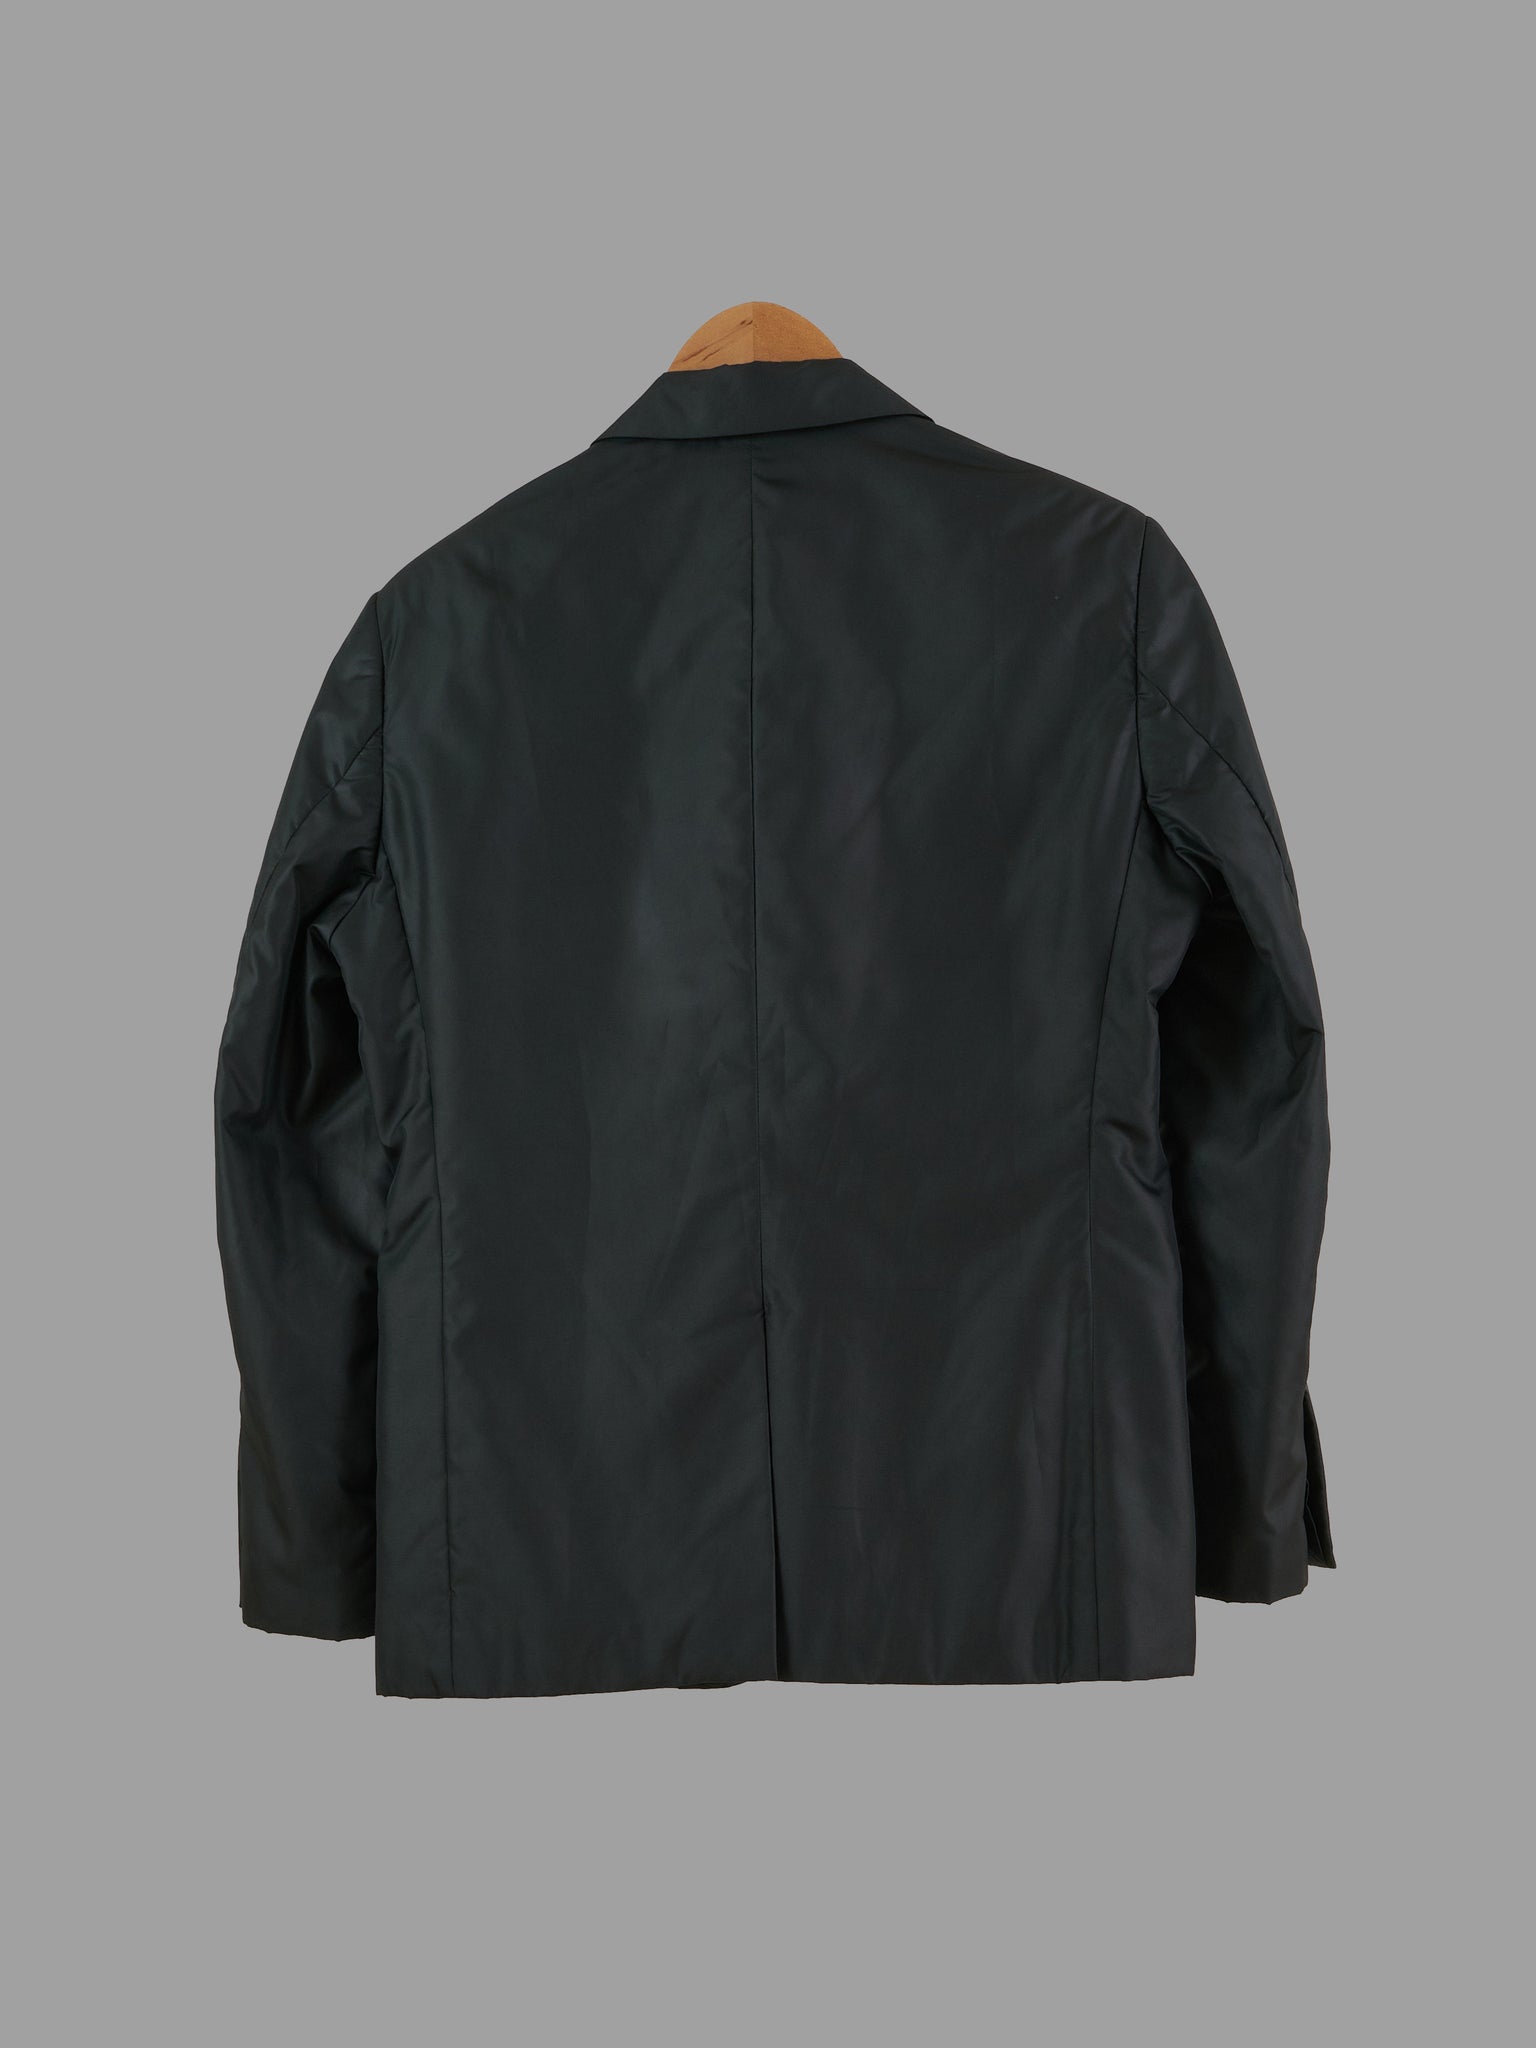 Teiji Hayama black polyester double faced 2 button blazer - mens size 46 S